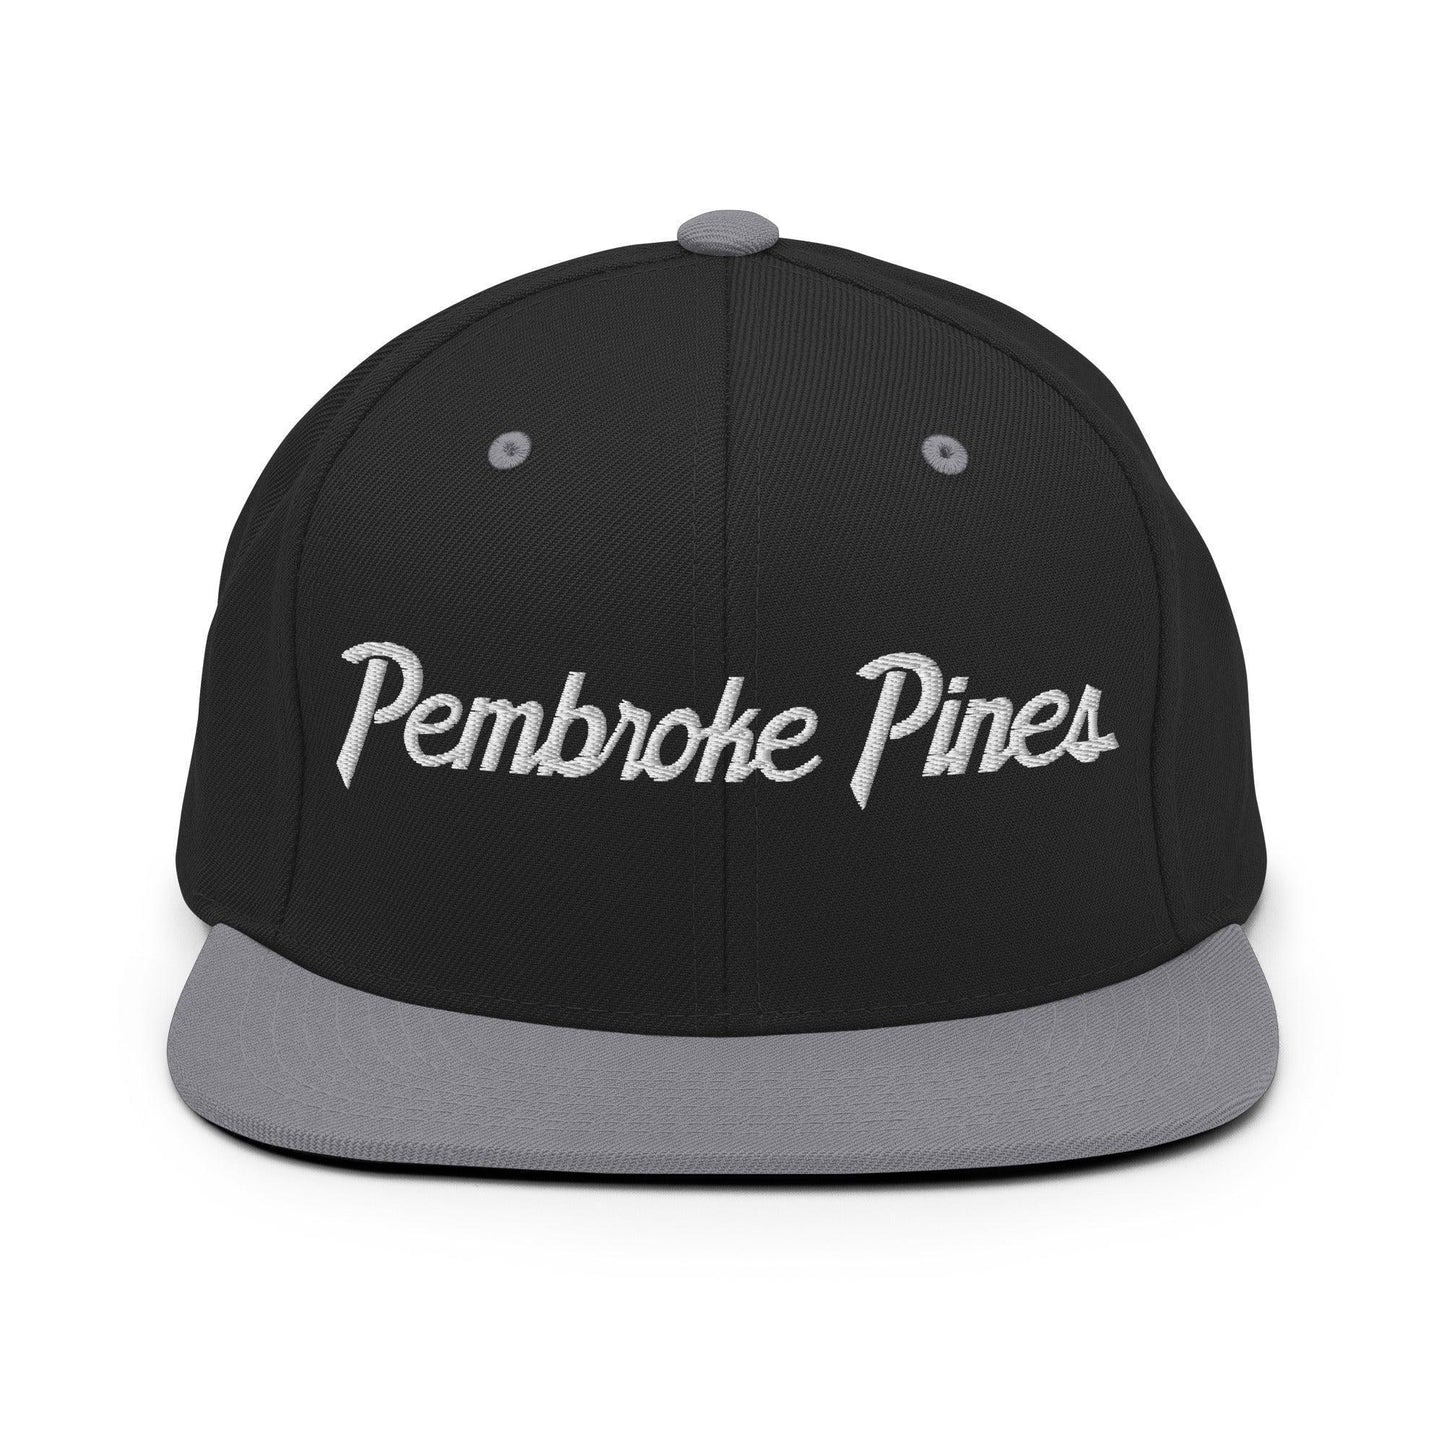 Pembroke Pines Script Snapback Hat Black/ Silver